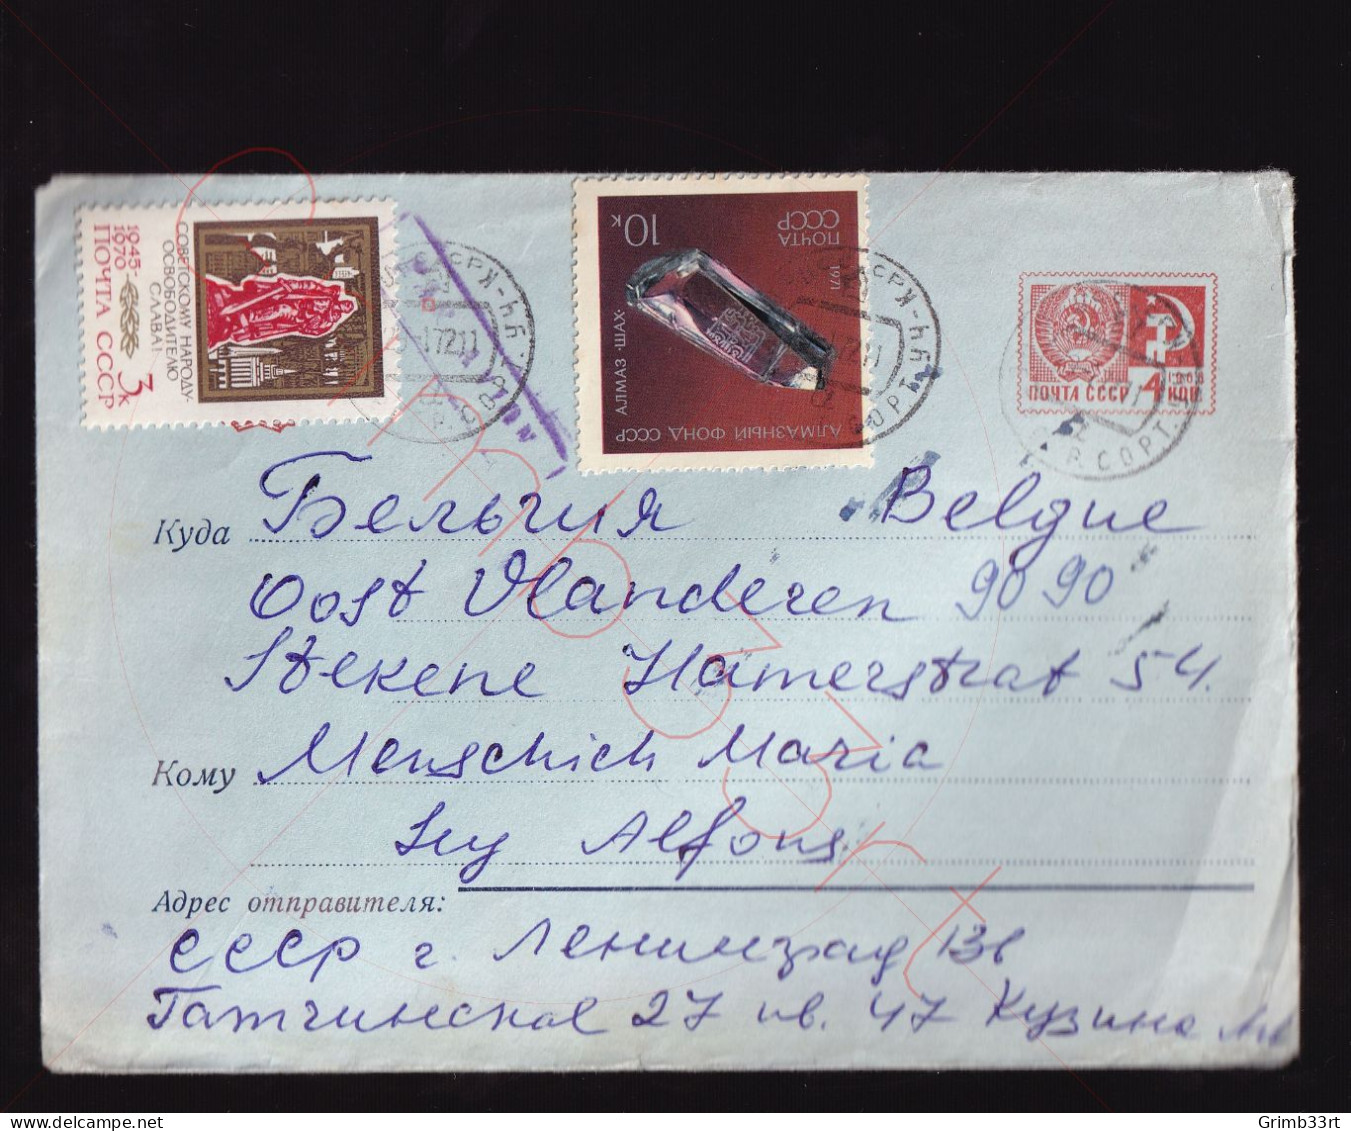 CCCP - Briefomslag Van Luchthaven Rusland Naar Stekene - PAR AVION - 23 Januari 1971 - Lettres & Documents